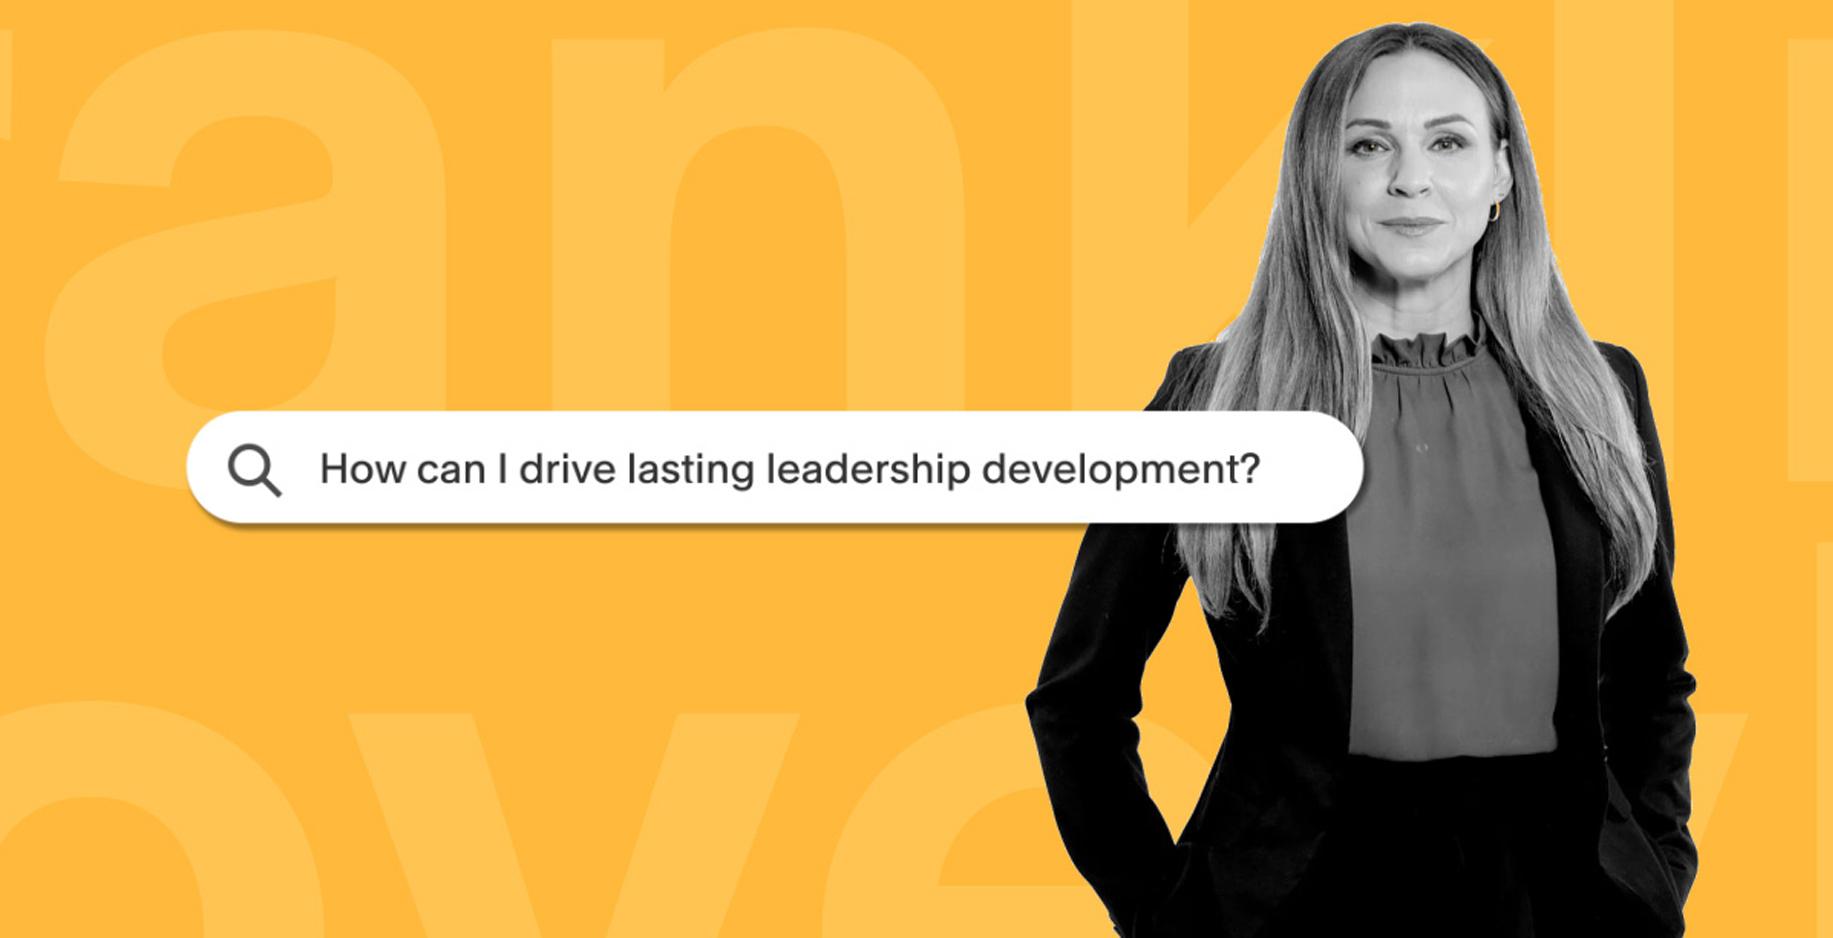 Blog: 3 Ways to Drive Lasting Leadership Development